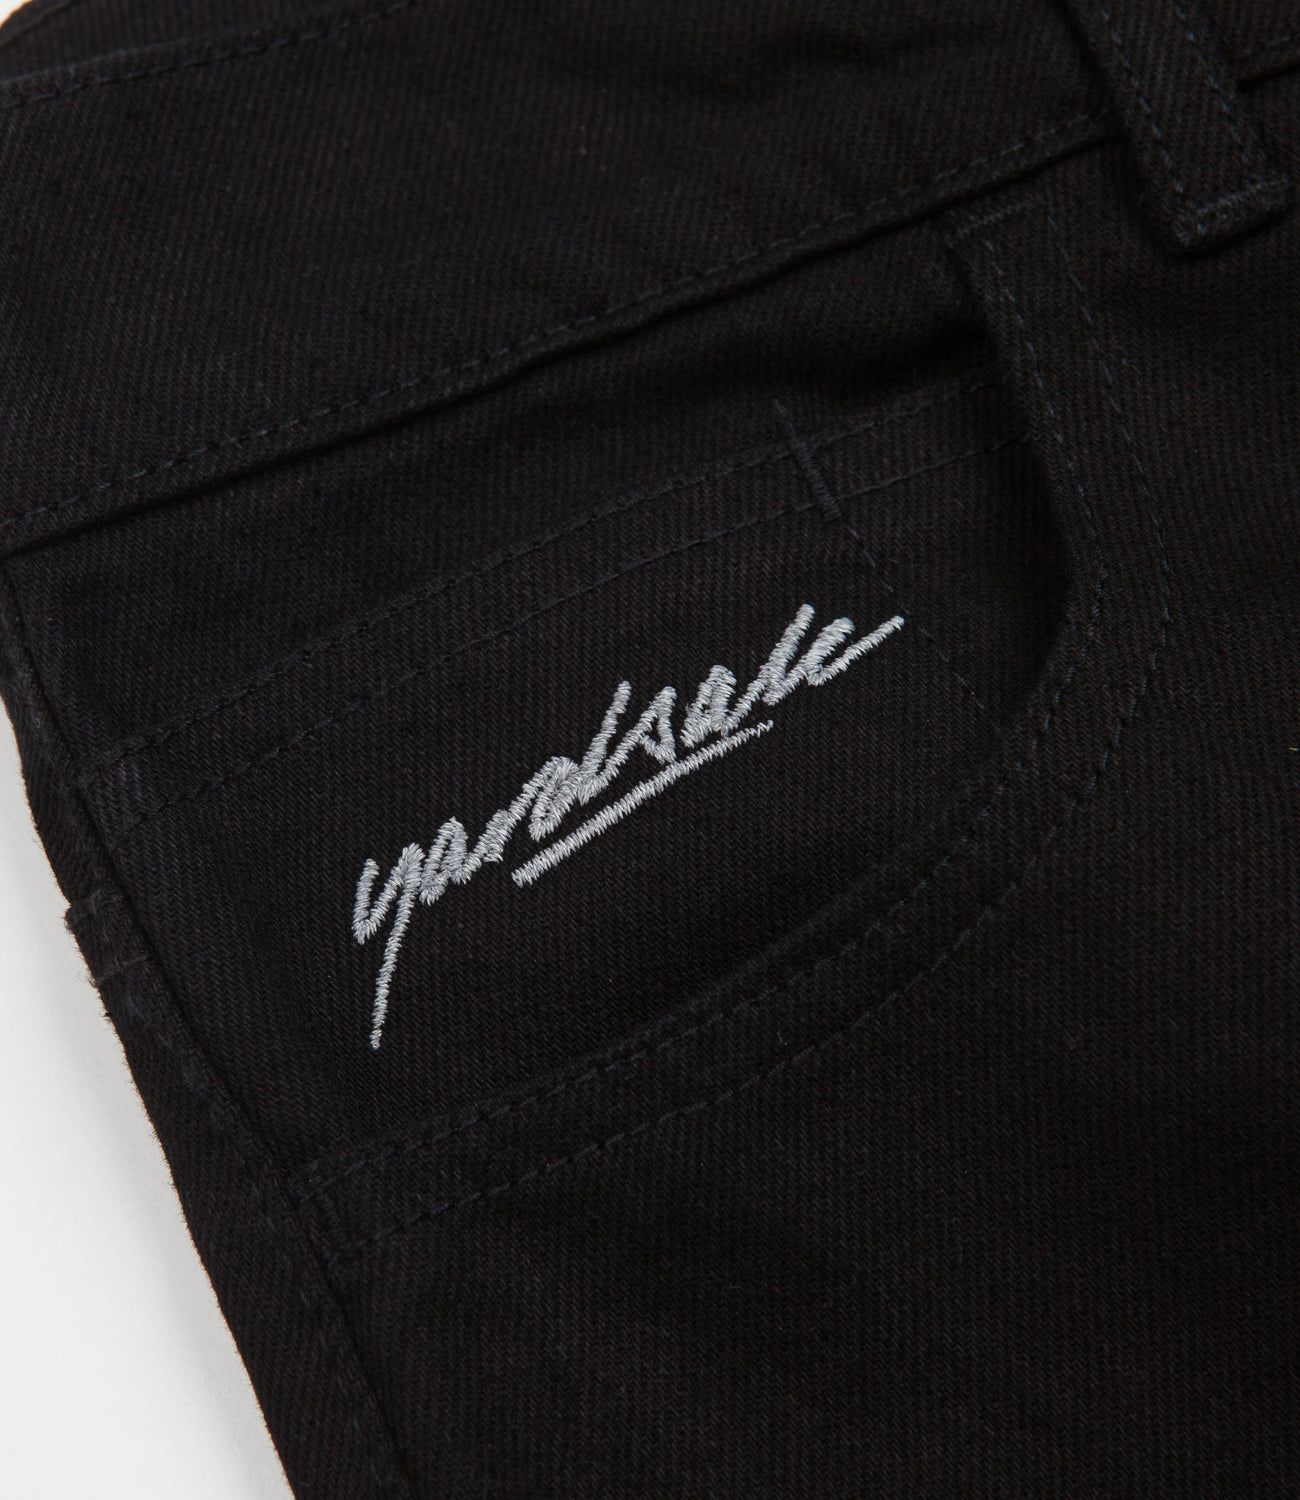 Yardsale Phantasy Jeans - Black / Silver | Flatspot